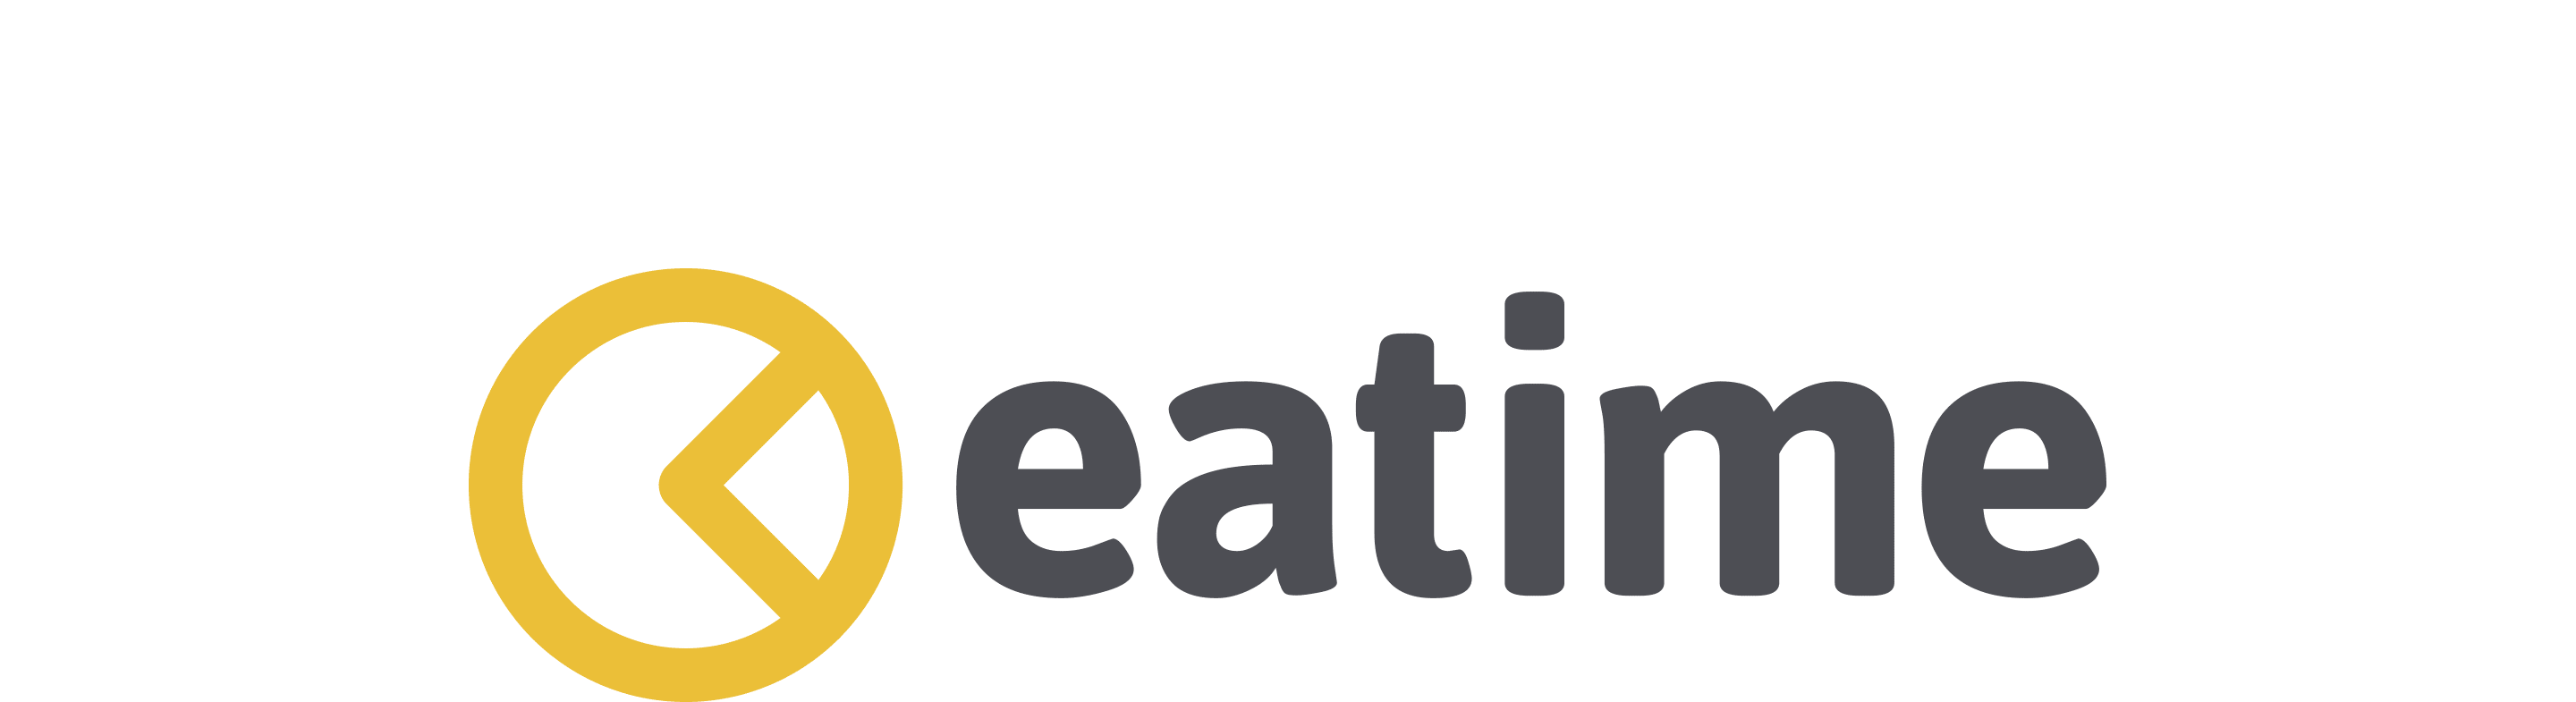 Eatime application design concept